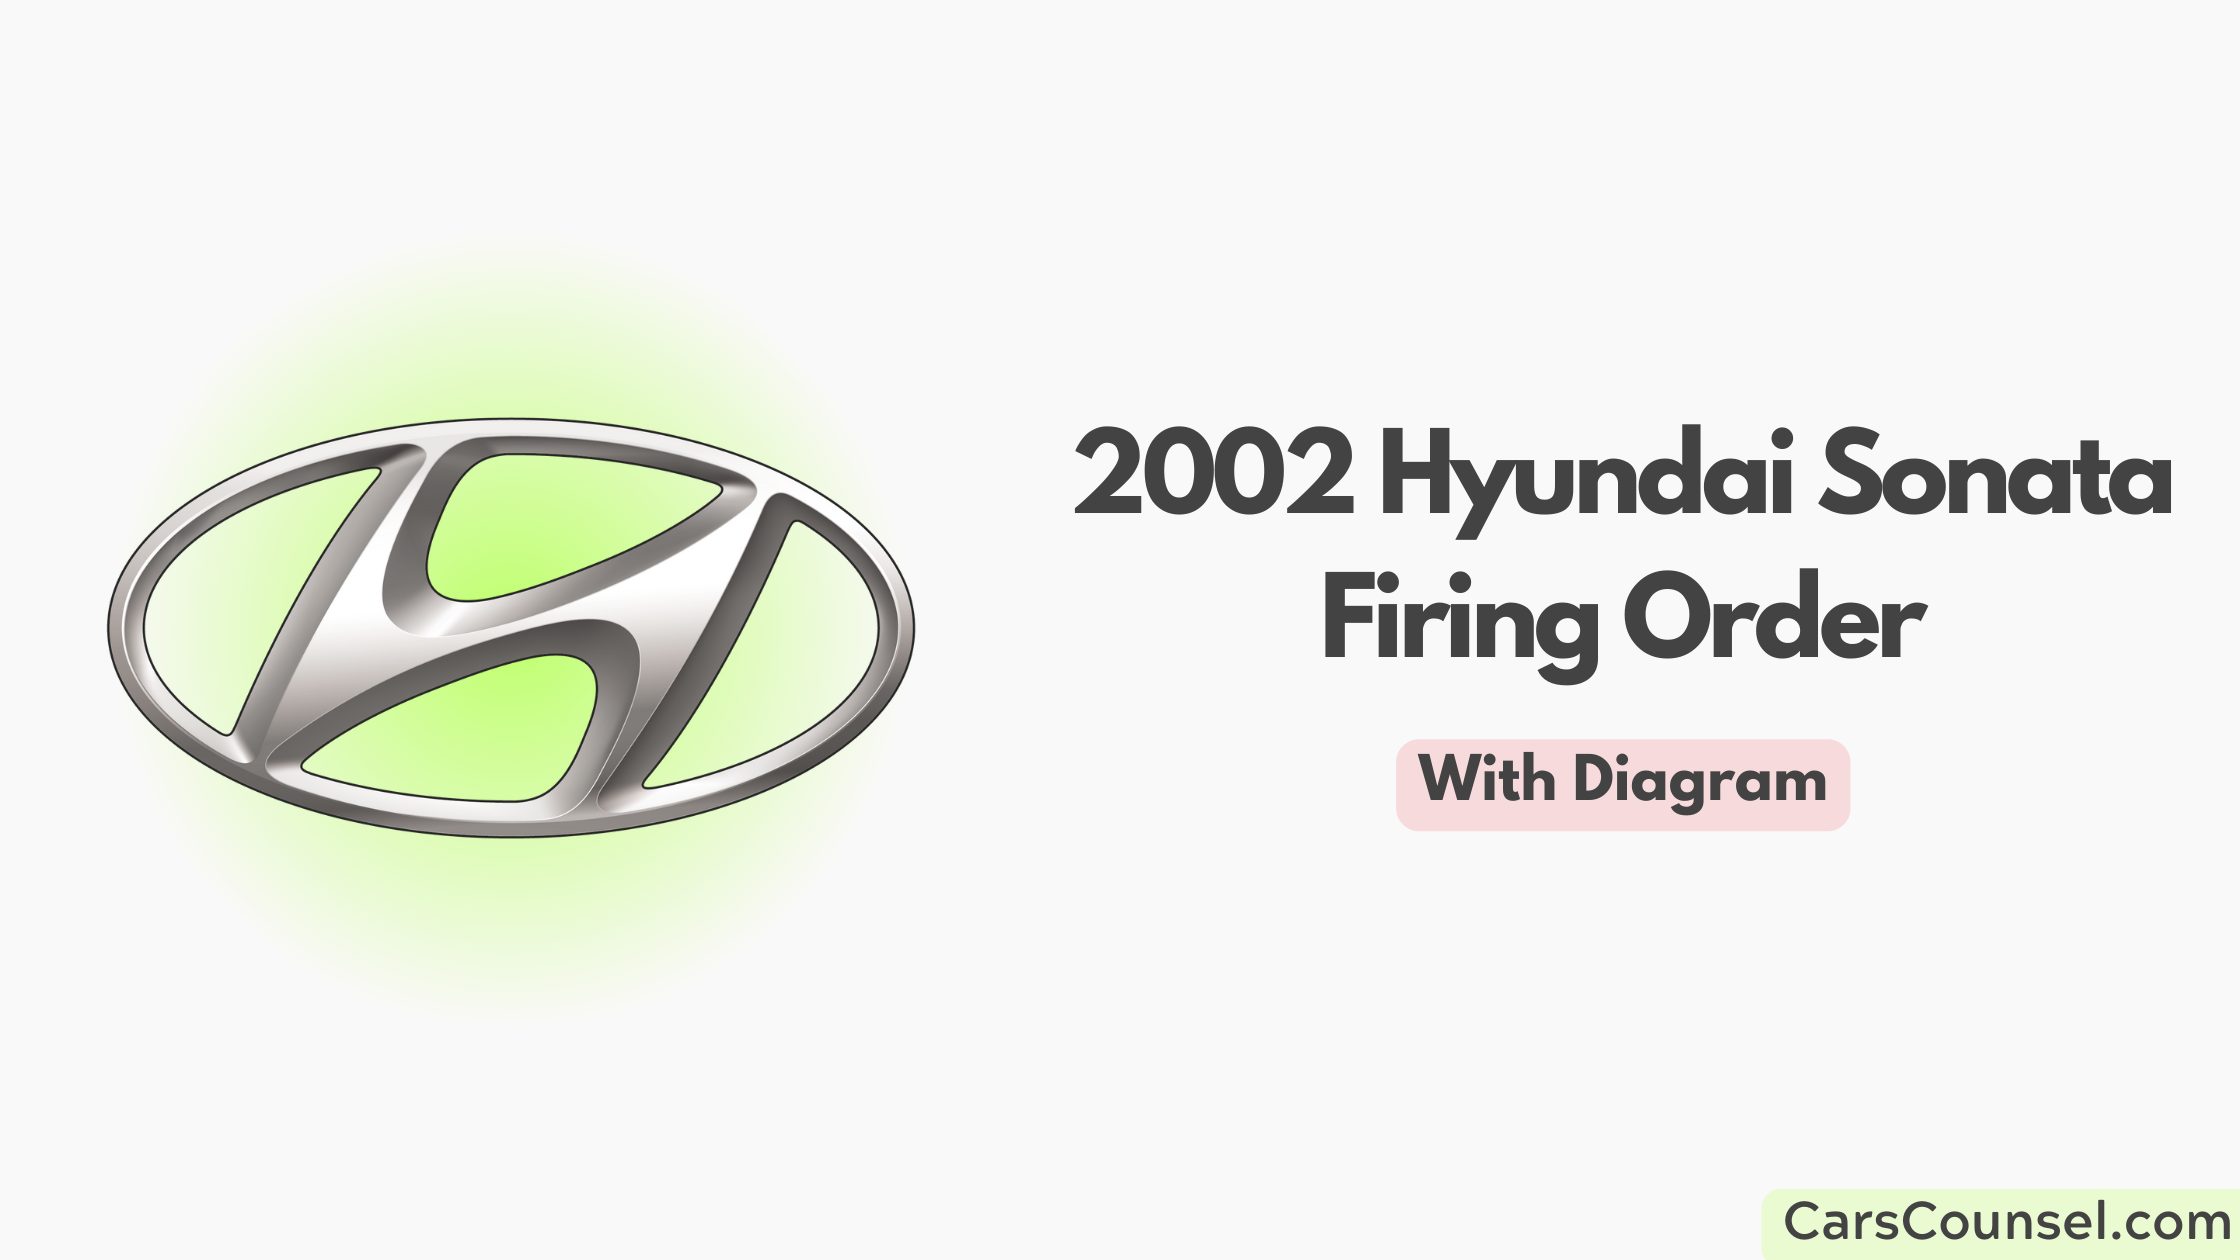 2002 Hyundai Sonata Firing Order With Diagram